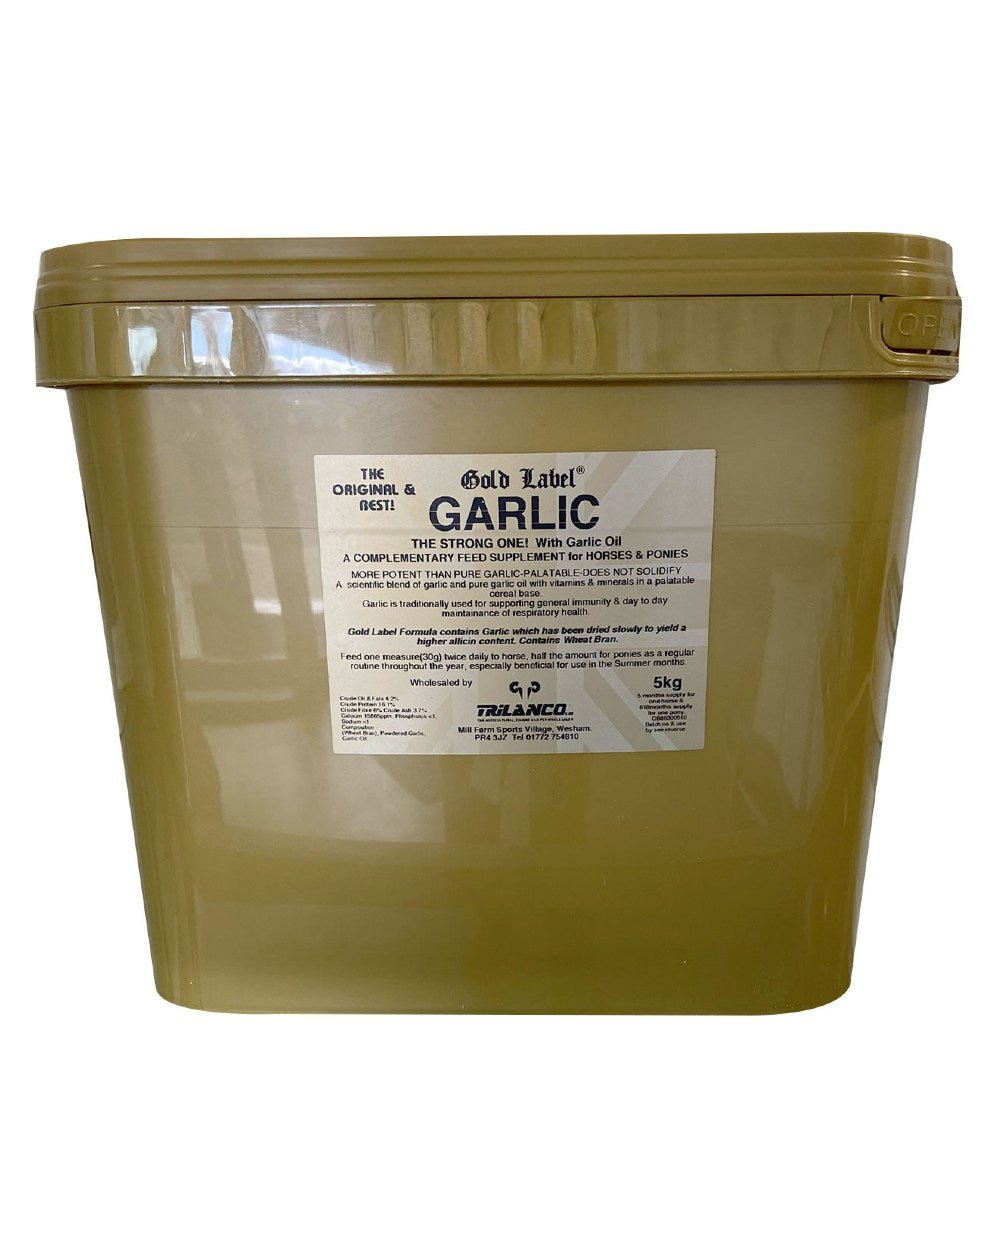 Gold Label Garlic Powder On A White Background